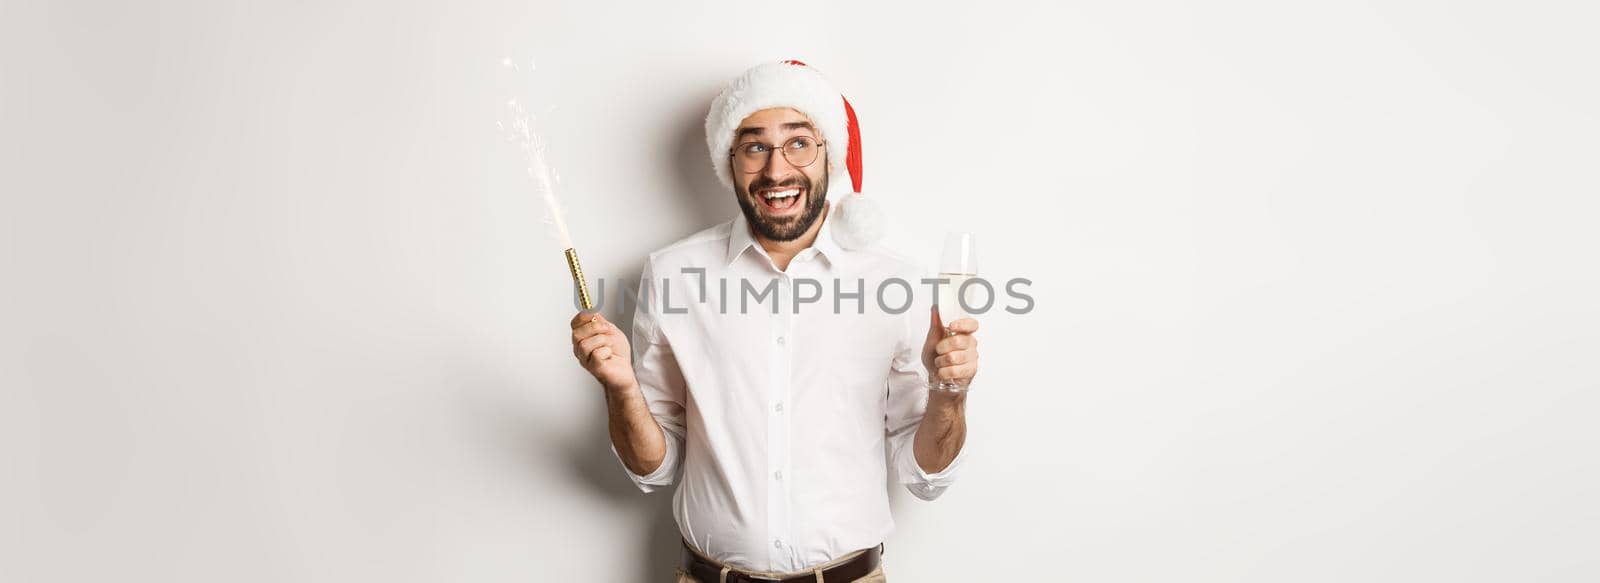 Winter holidays and celebration. Happy businessman enjoying New Year party, wearing Santa hat and drinking champagne, smiling amused, white background.